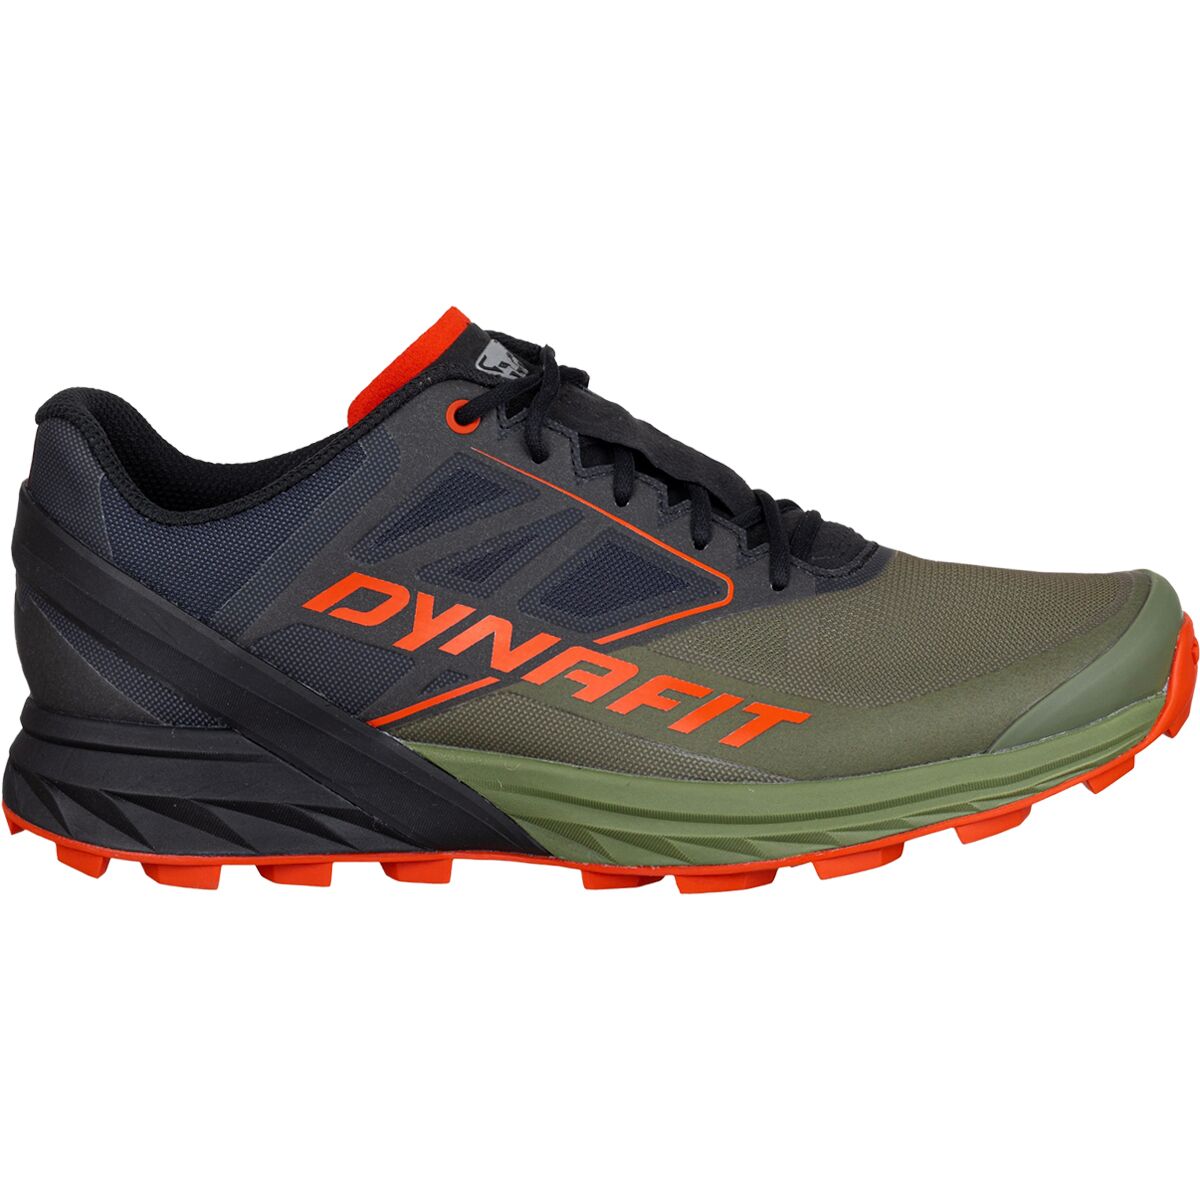 Dynafit Alpine Trail Running Shoe - Men's